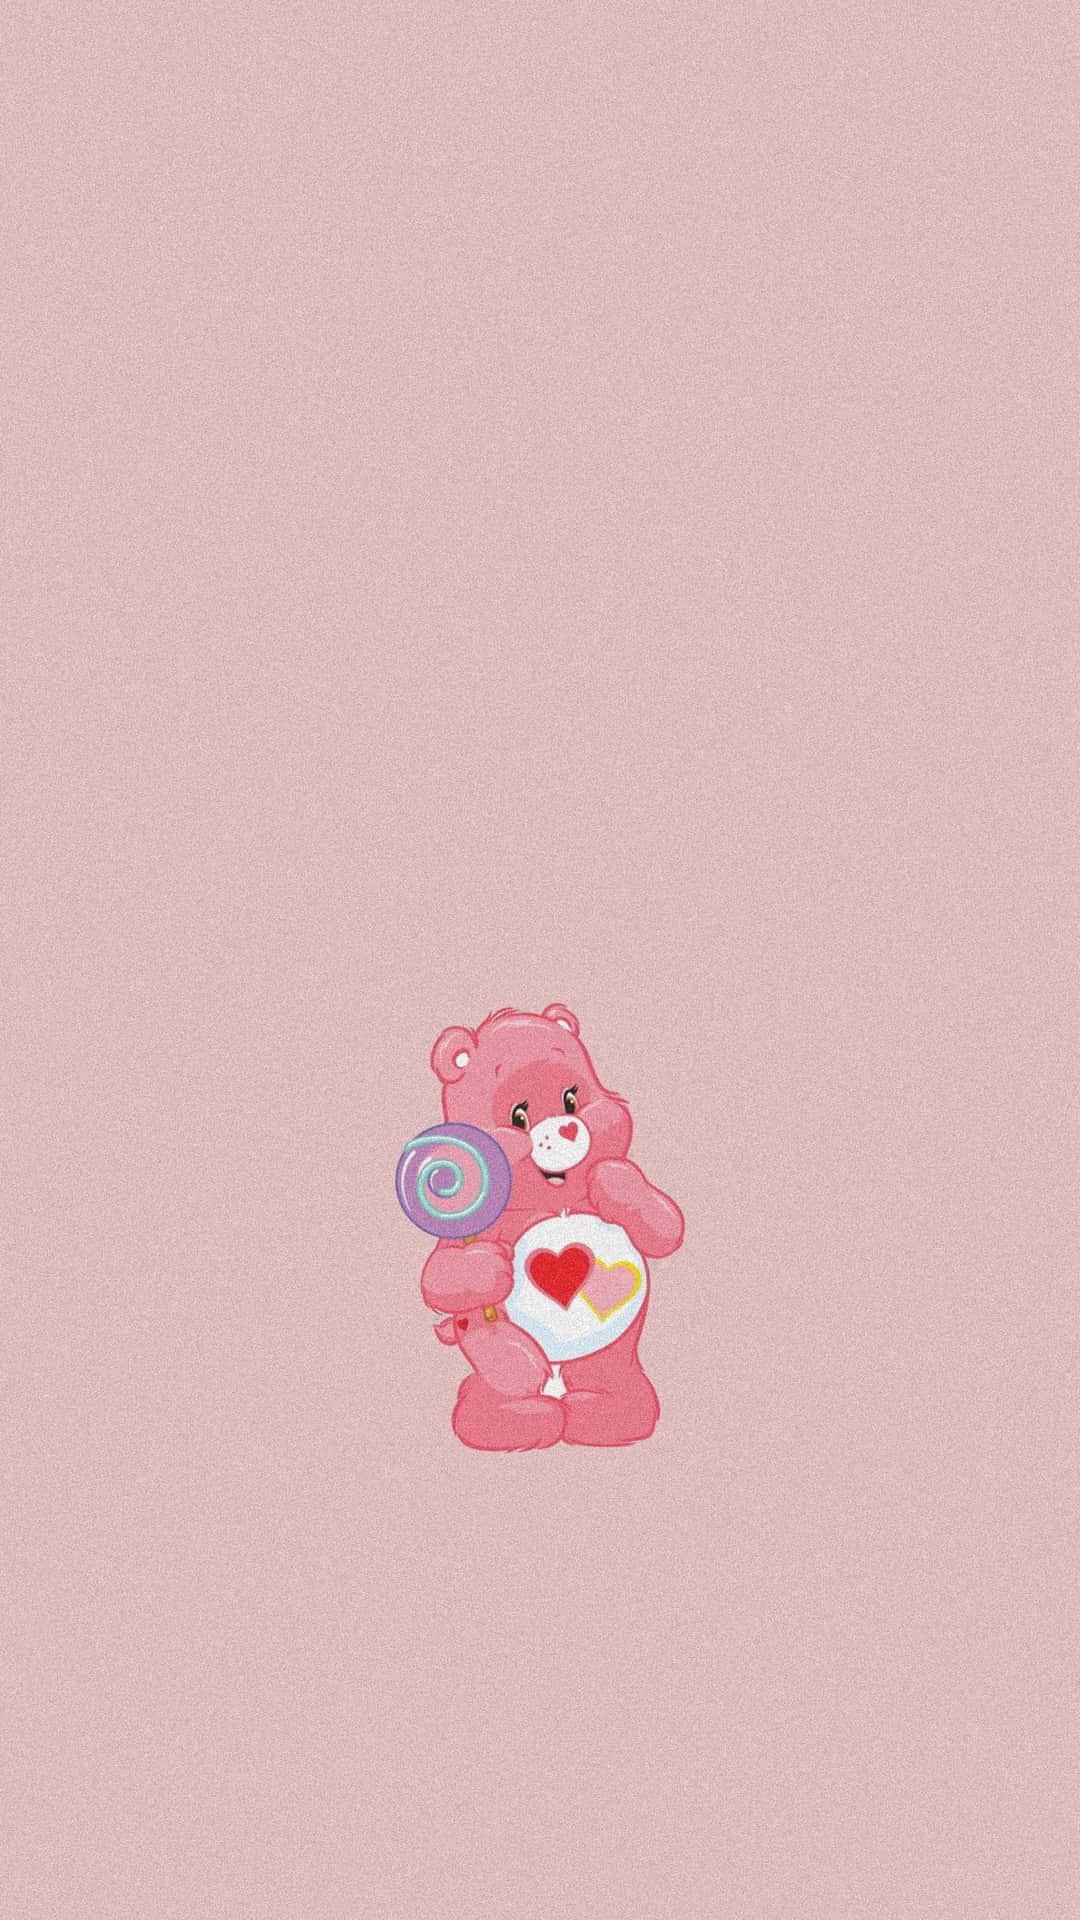 Pink bear holding a lollipop - Care Bears